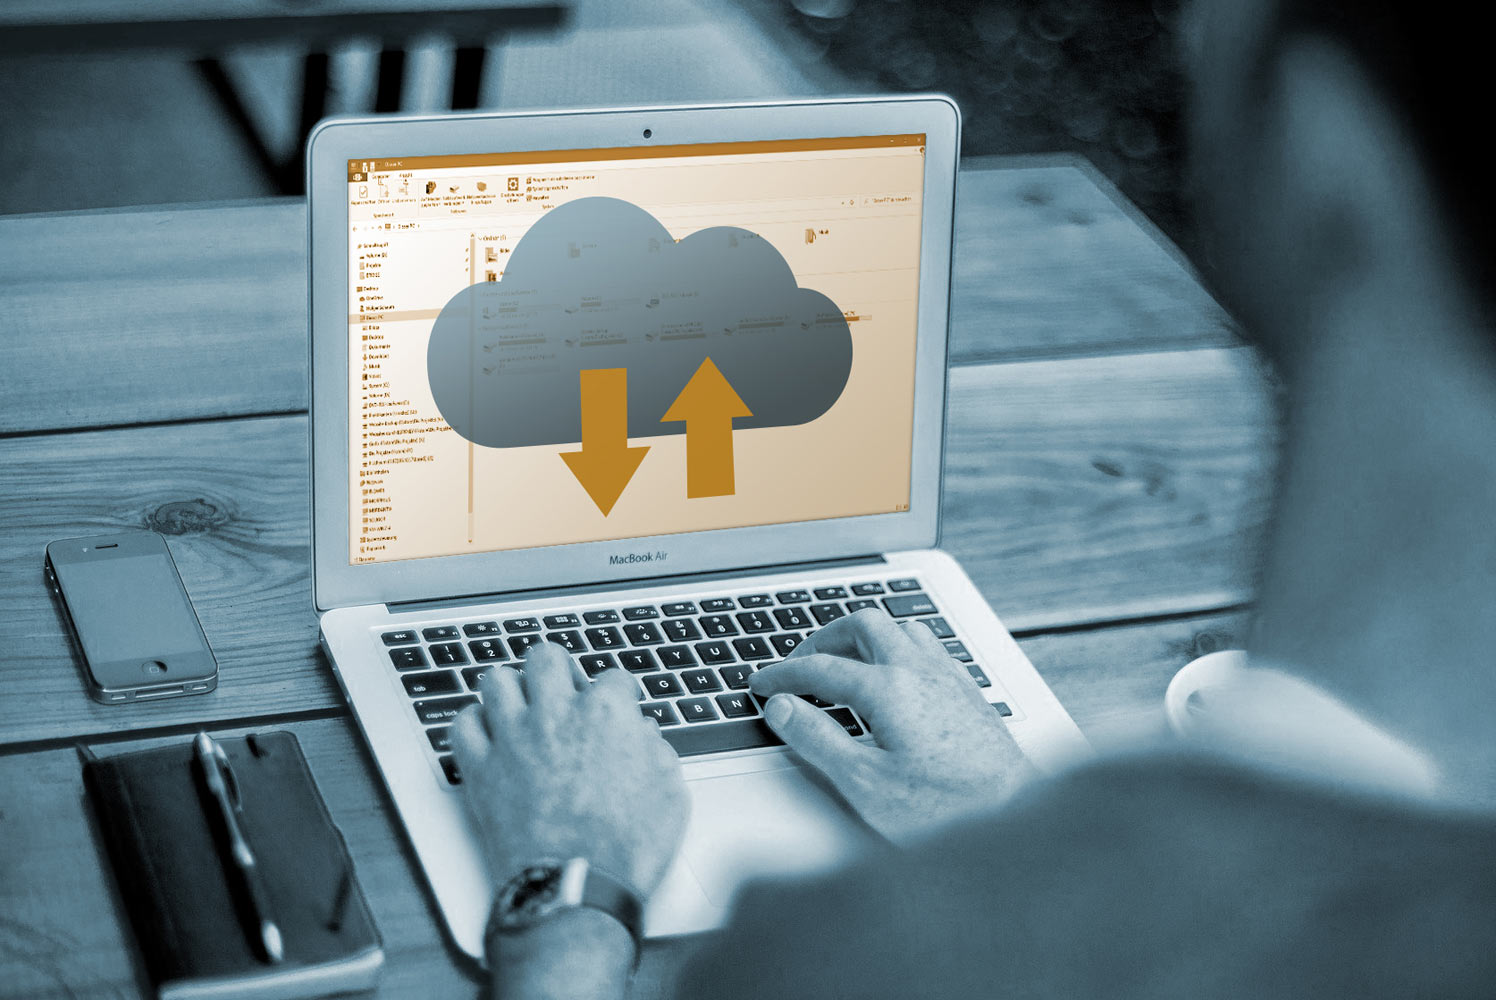 Nextcloud module - secure and privacy-compliant cloud storage